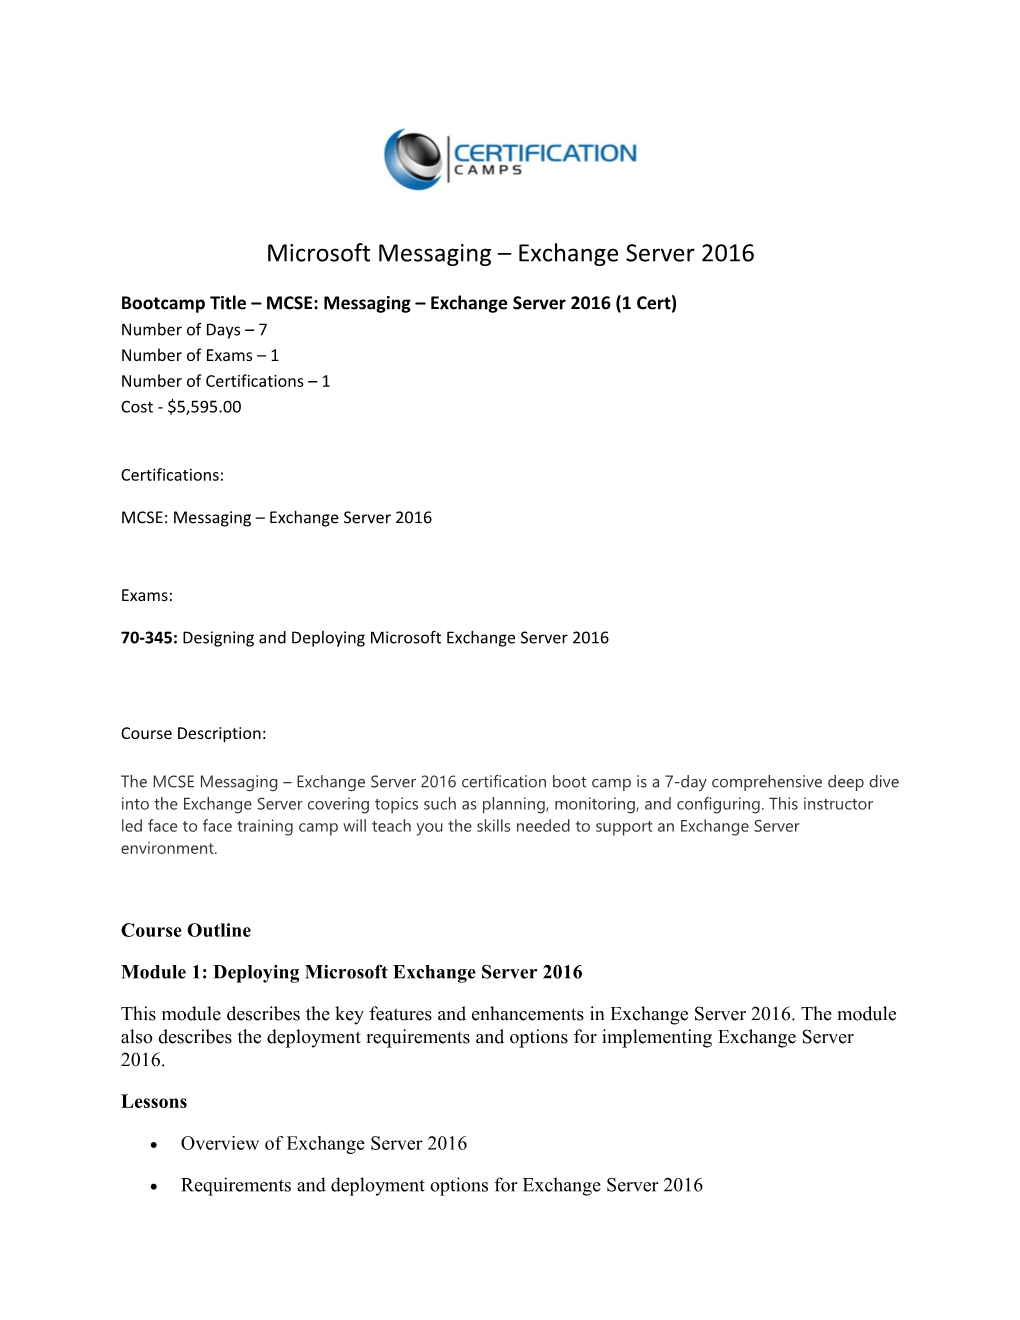 Microsoft Messaging Exchange Server 2016